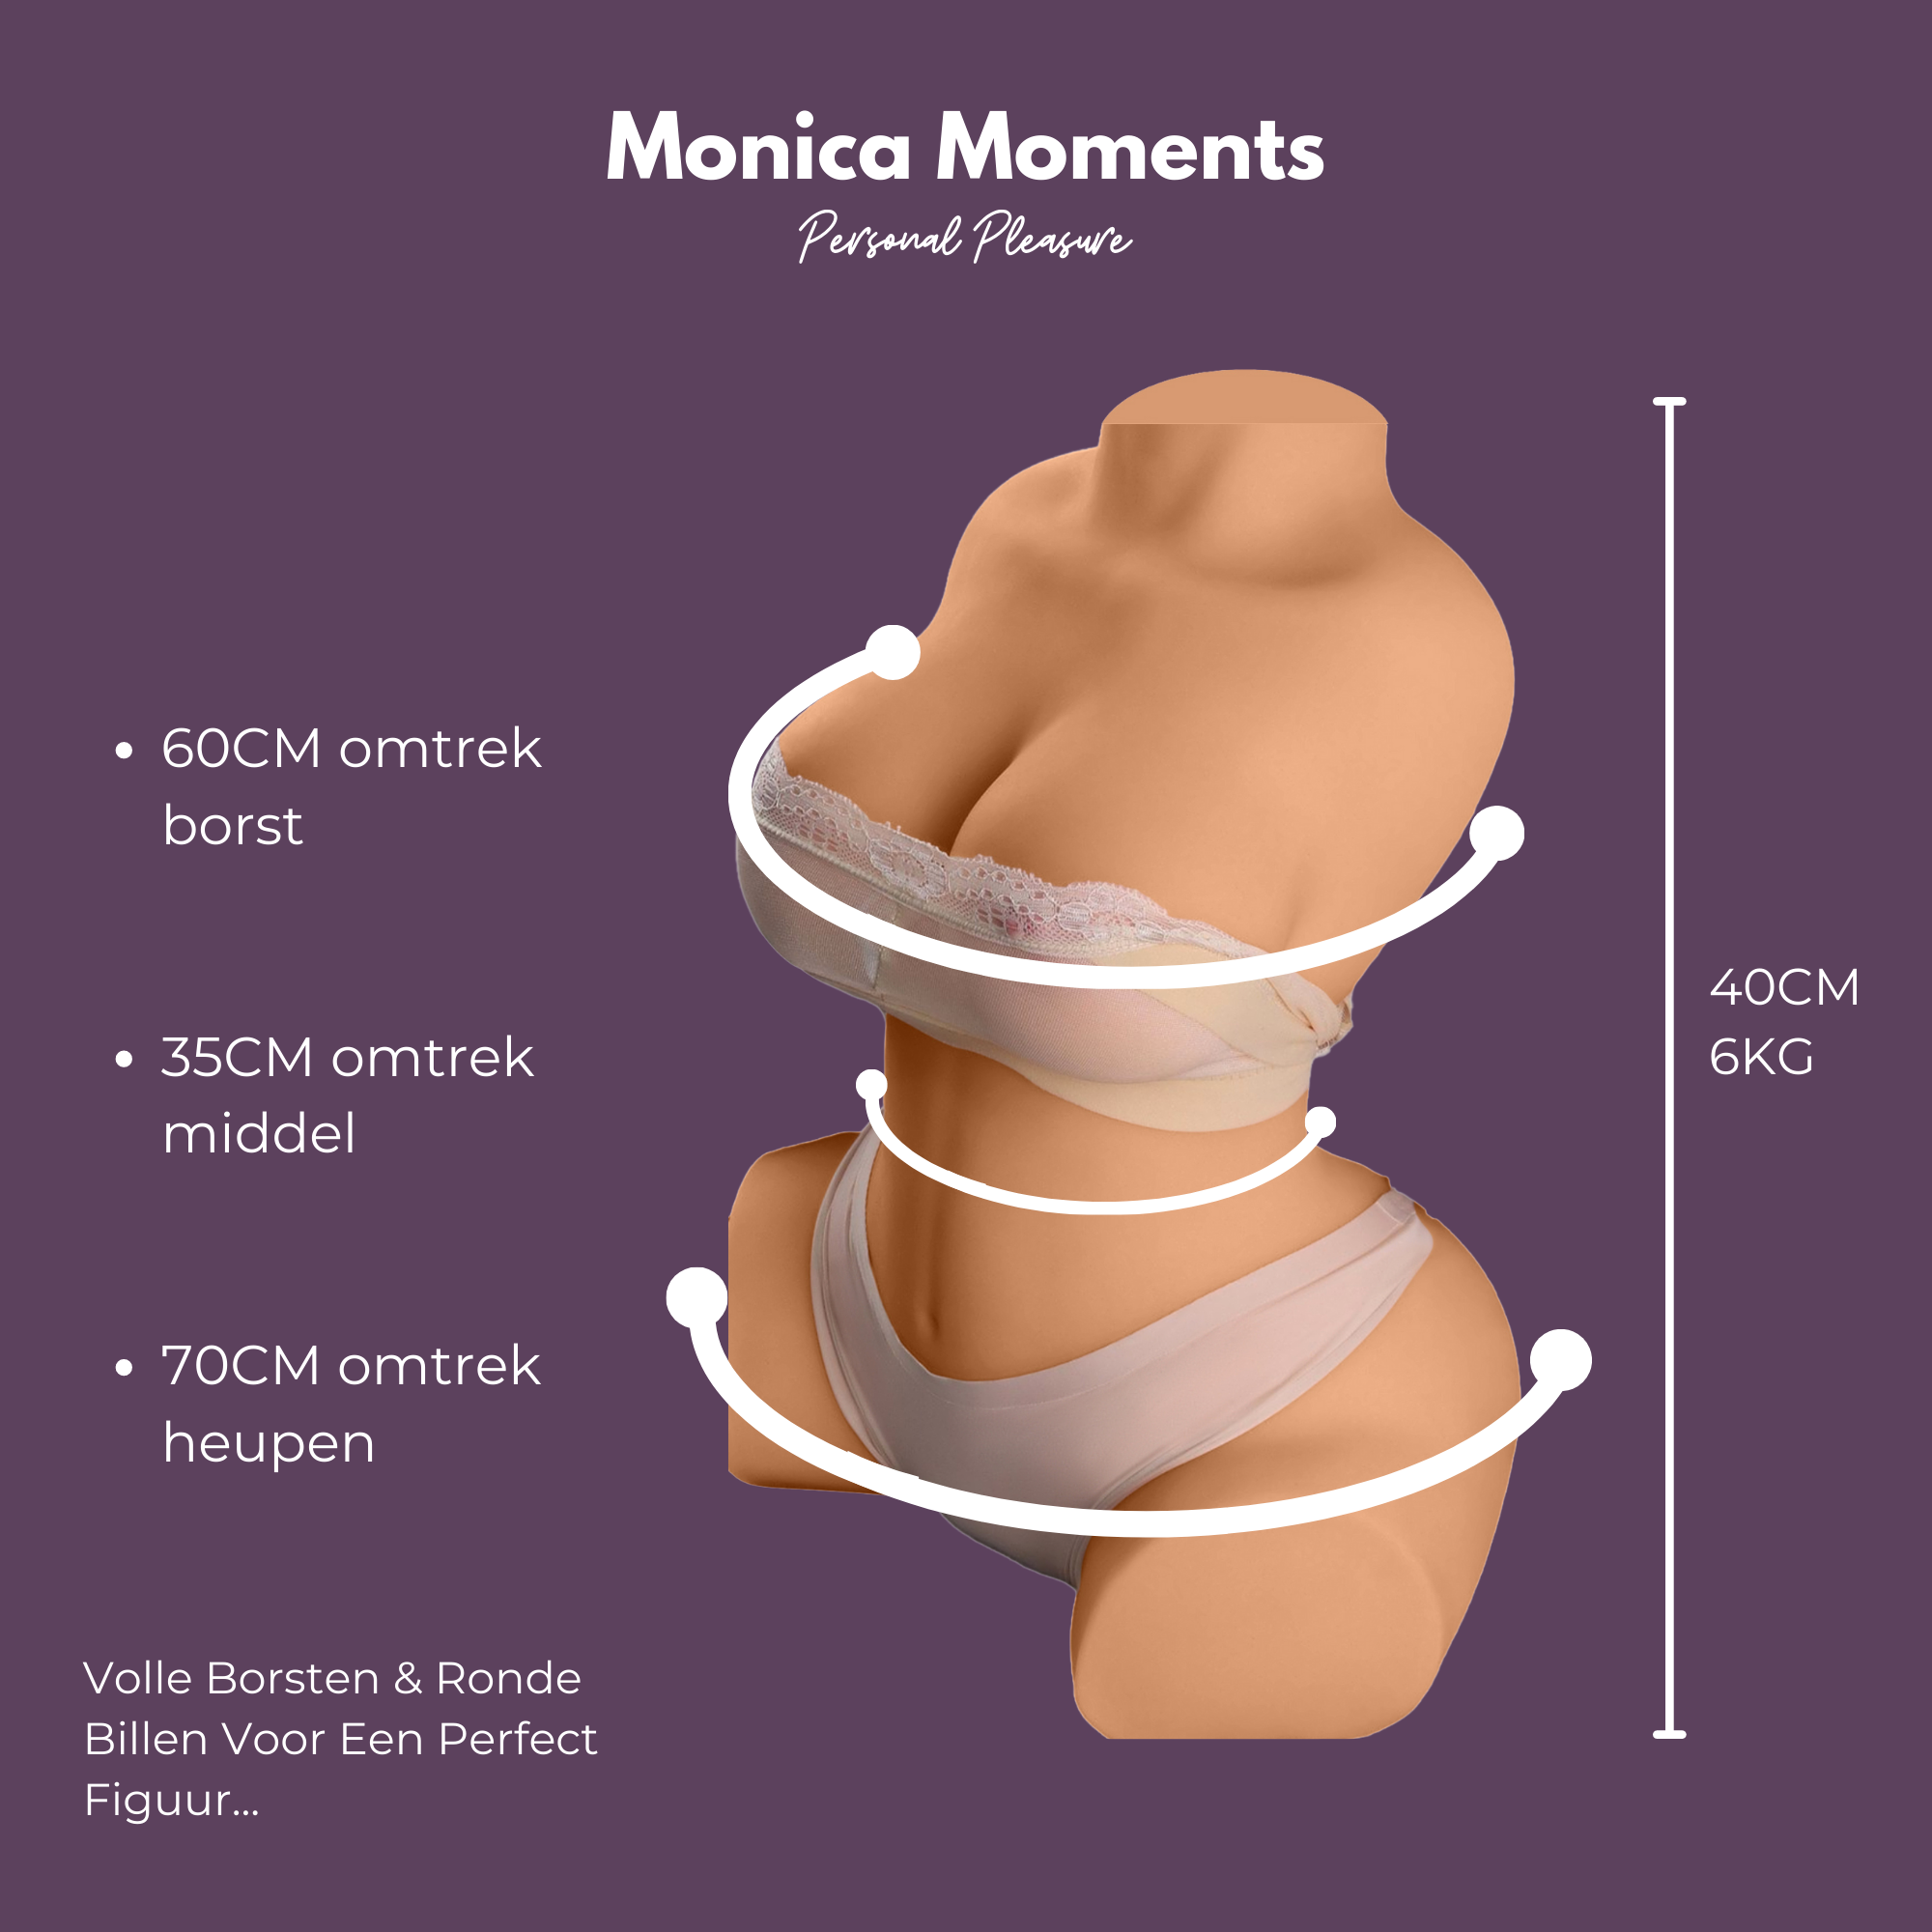 Brazilian Sex Doll Monica - Monica Moments [6KG-40CM]